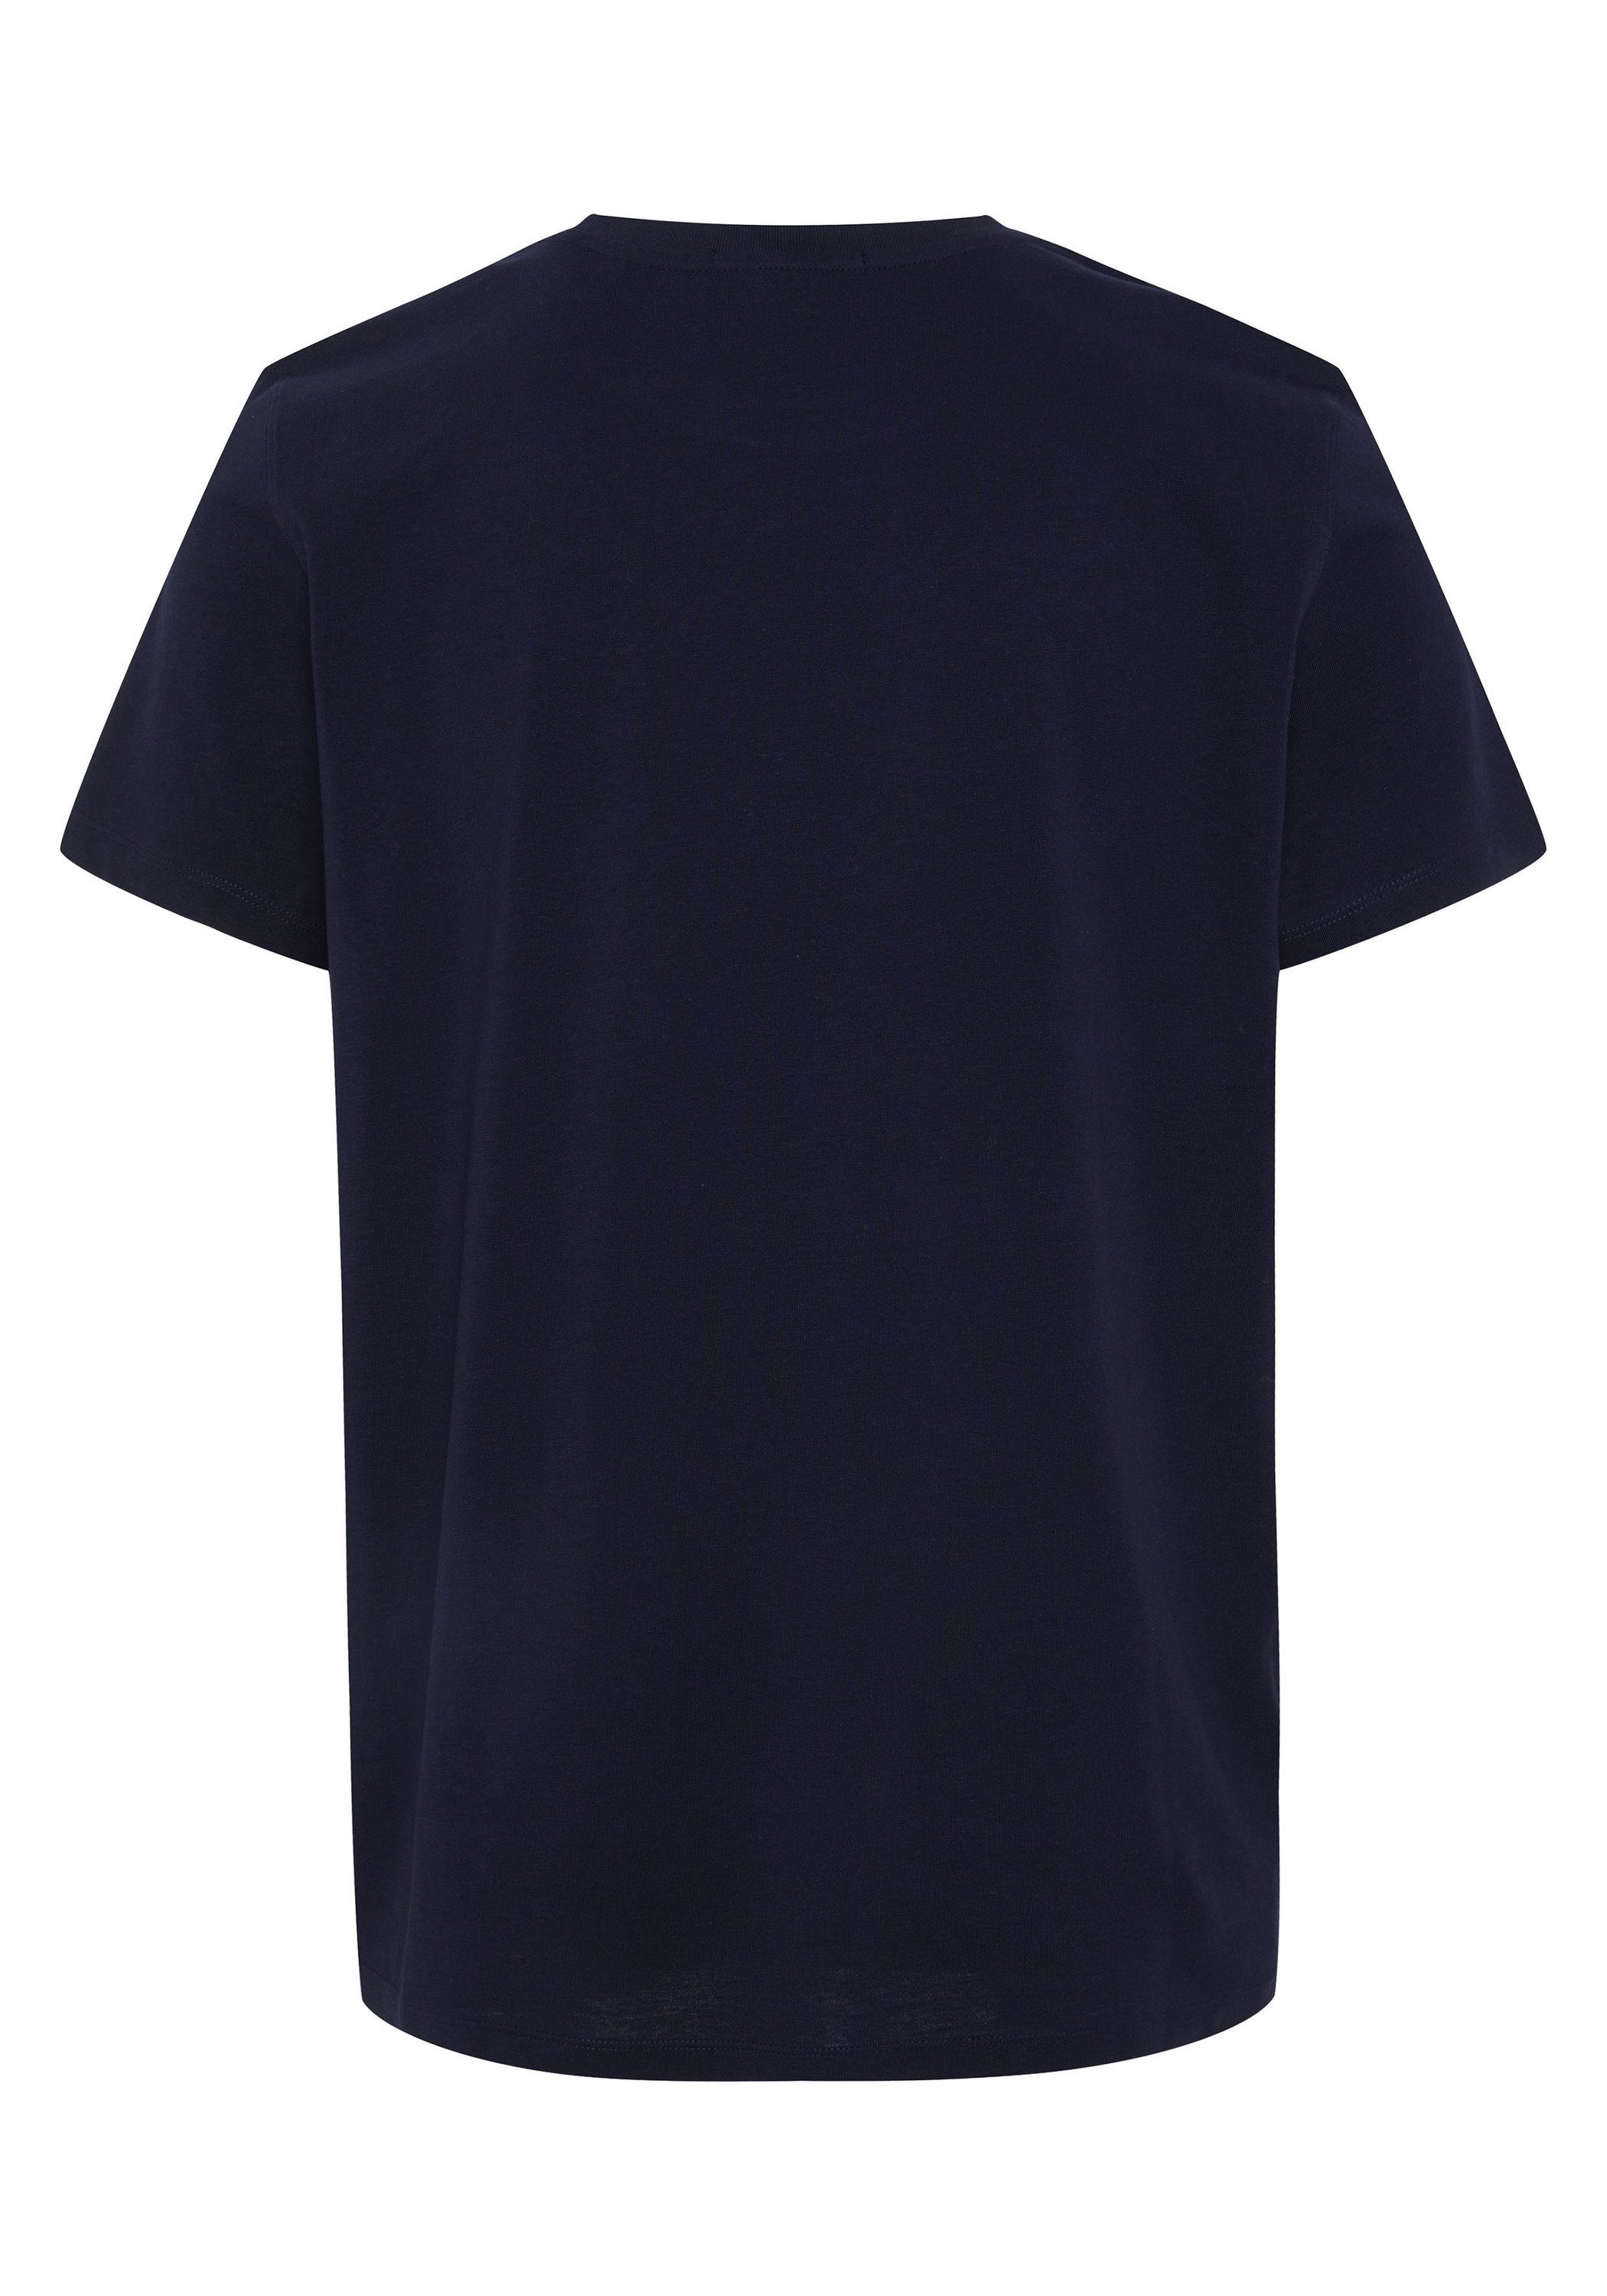 Chiemsee Sky 19-3924 plusminus-Design T-Shirt Night 1 Print-Shirt im